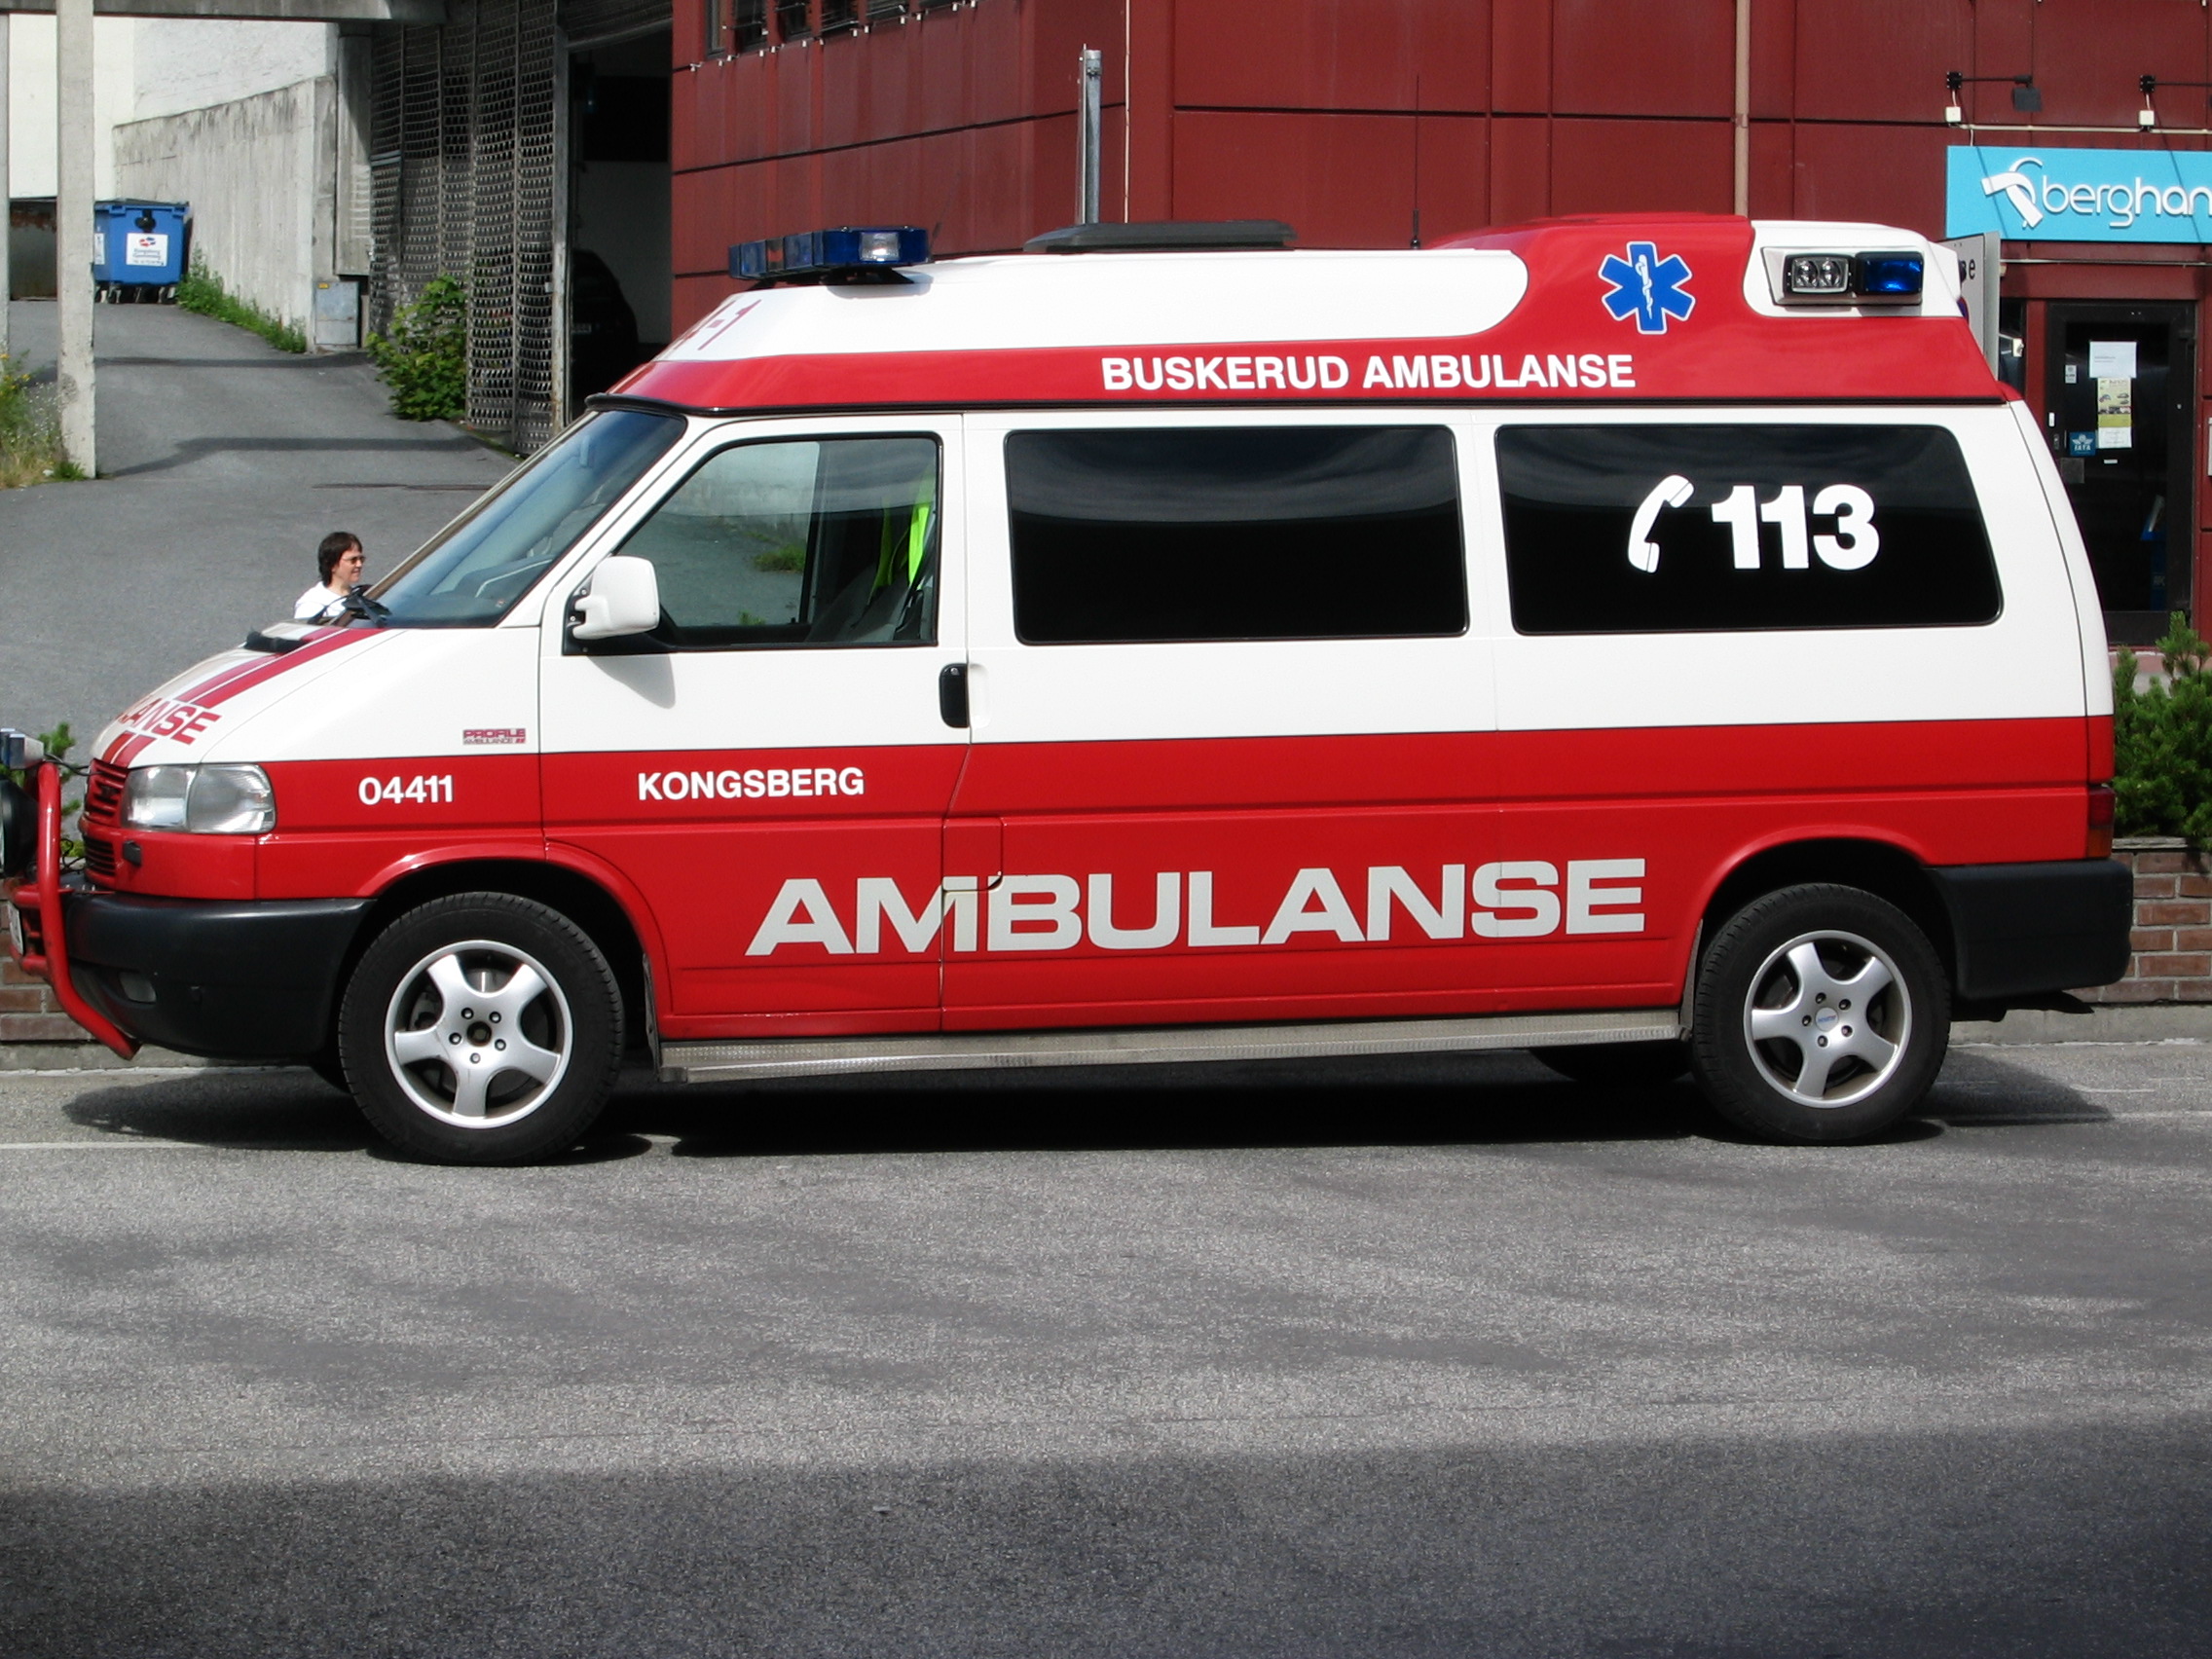 Volkswagen Ambulance (Image â„–: 02)